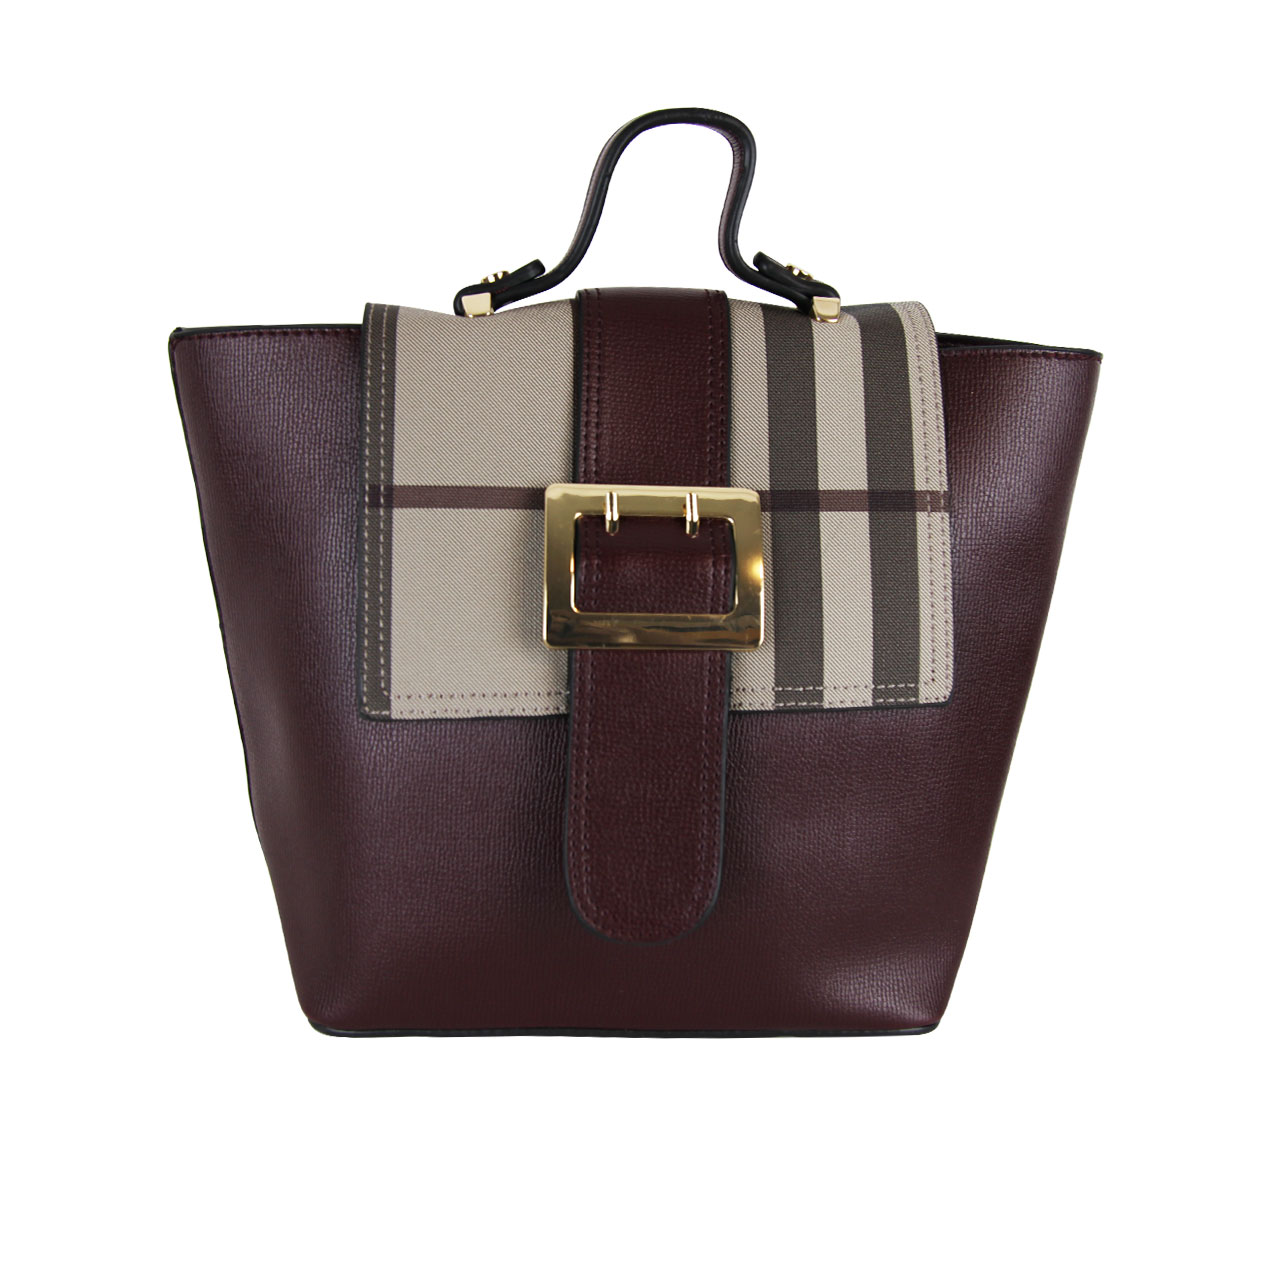 2 in 1 Brown Tote / Shoulder Bag & Crossbody Bag For Women